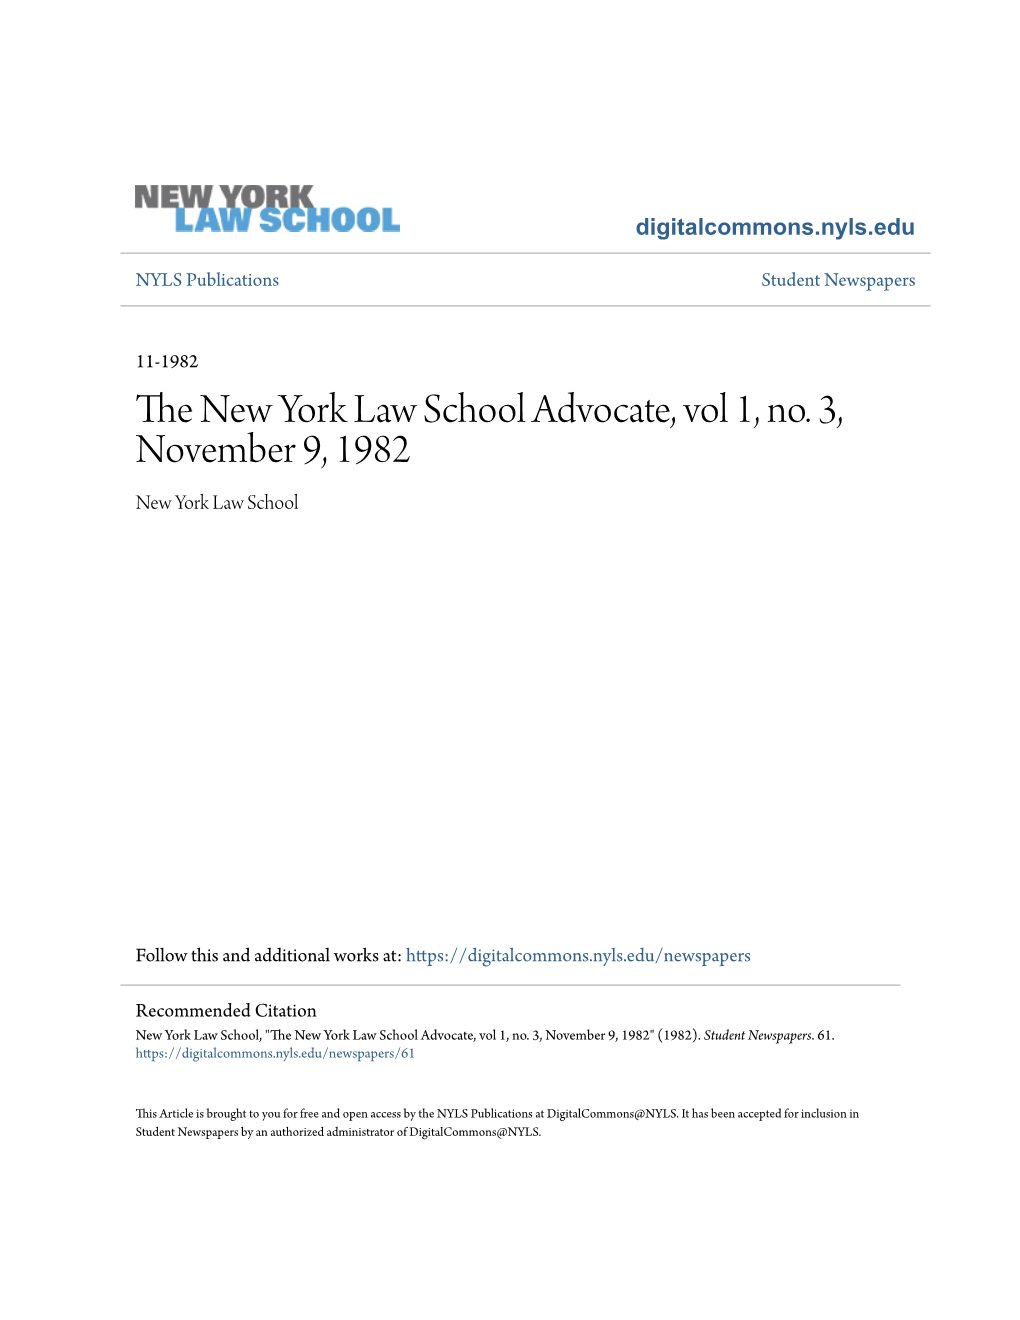 The New York Law School Advocate, Vol 1, No. 3, November 9, 1982